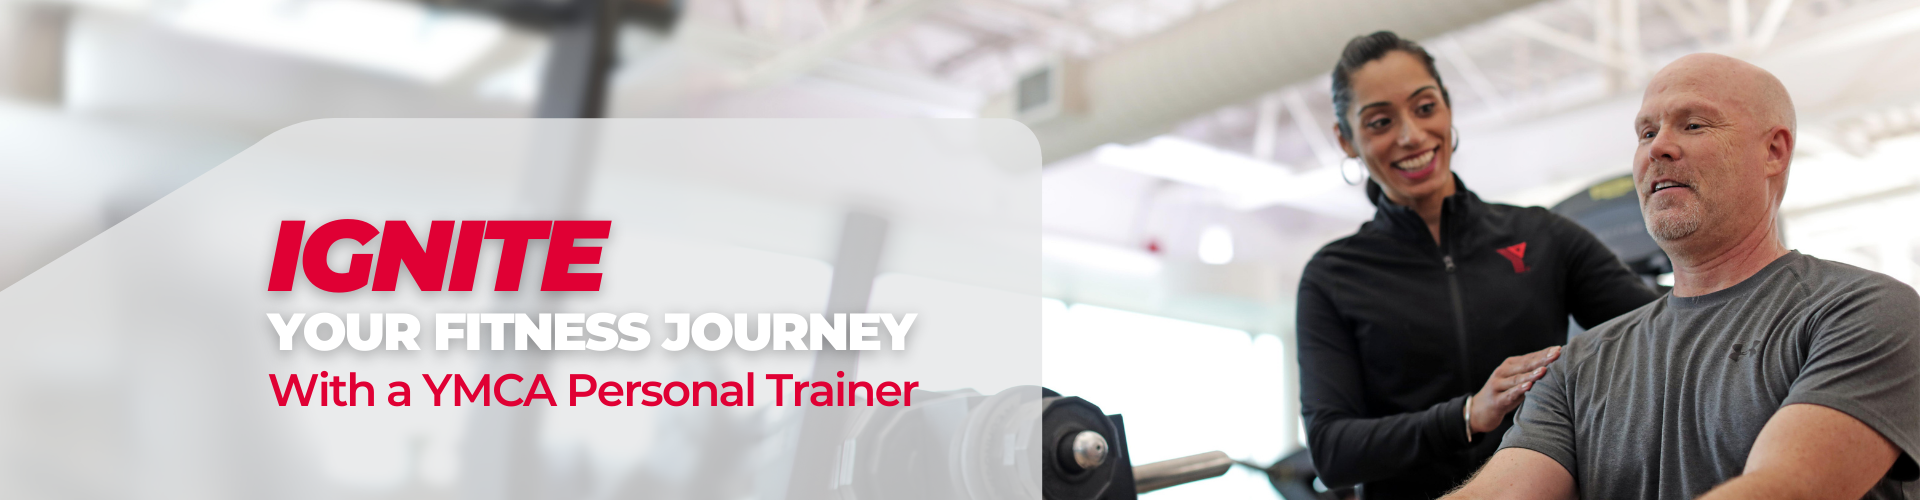 Personal Training - Online Fitness Programs - YMCA of Niagara